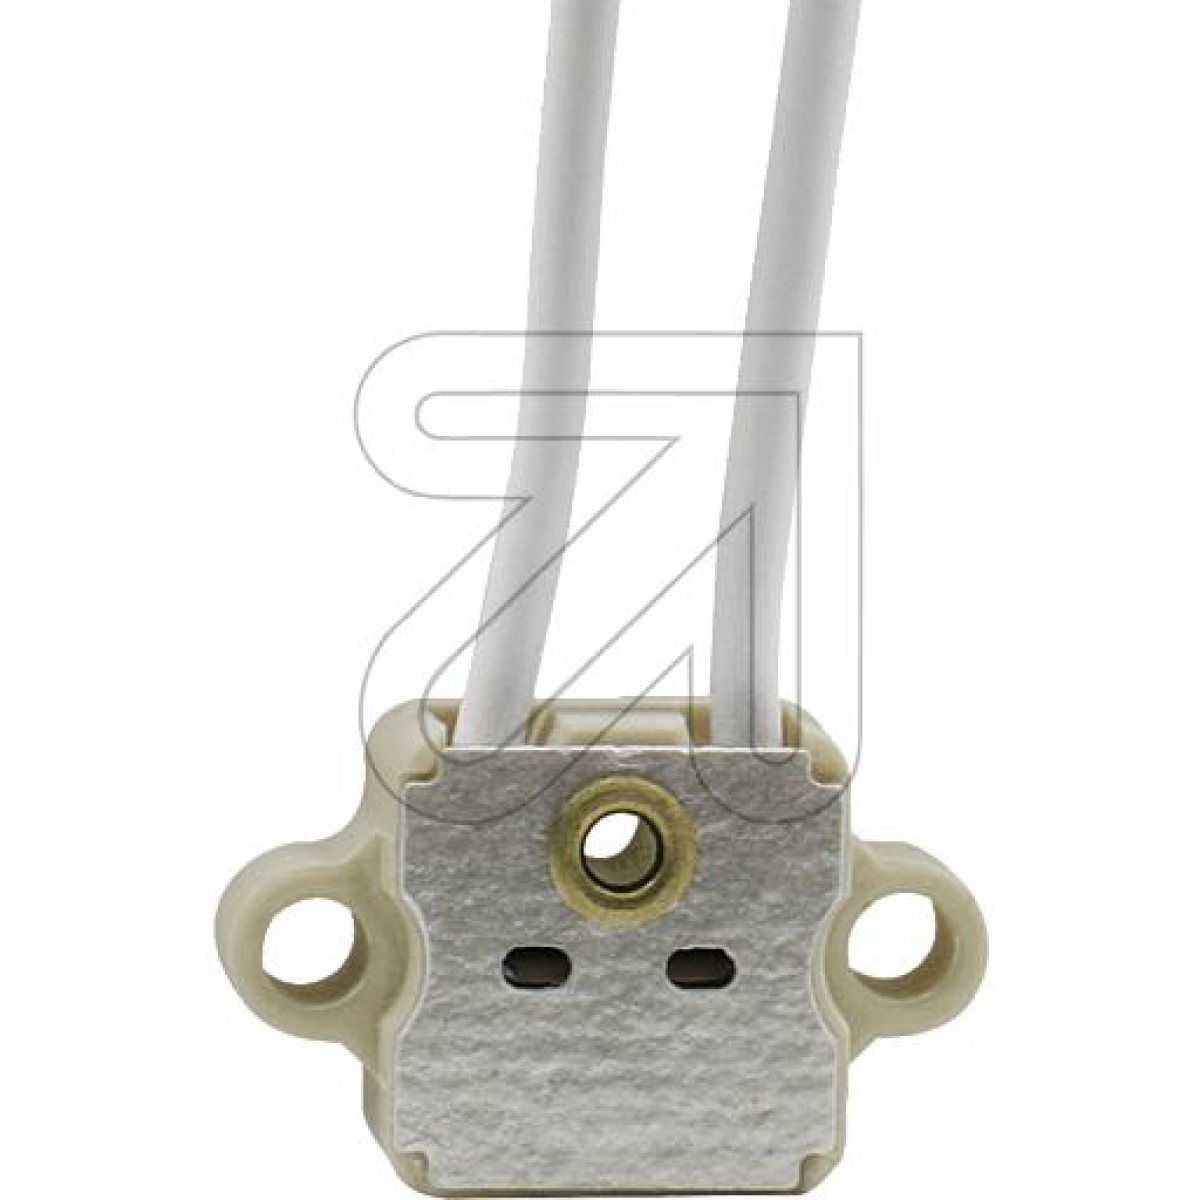 electroplastLow-voltage universal socket, rectangular AR 012970-Price for 5 pcs.Article-No: 609005